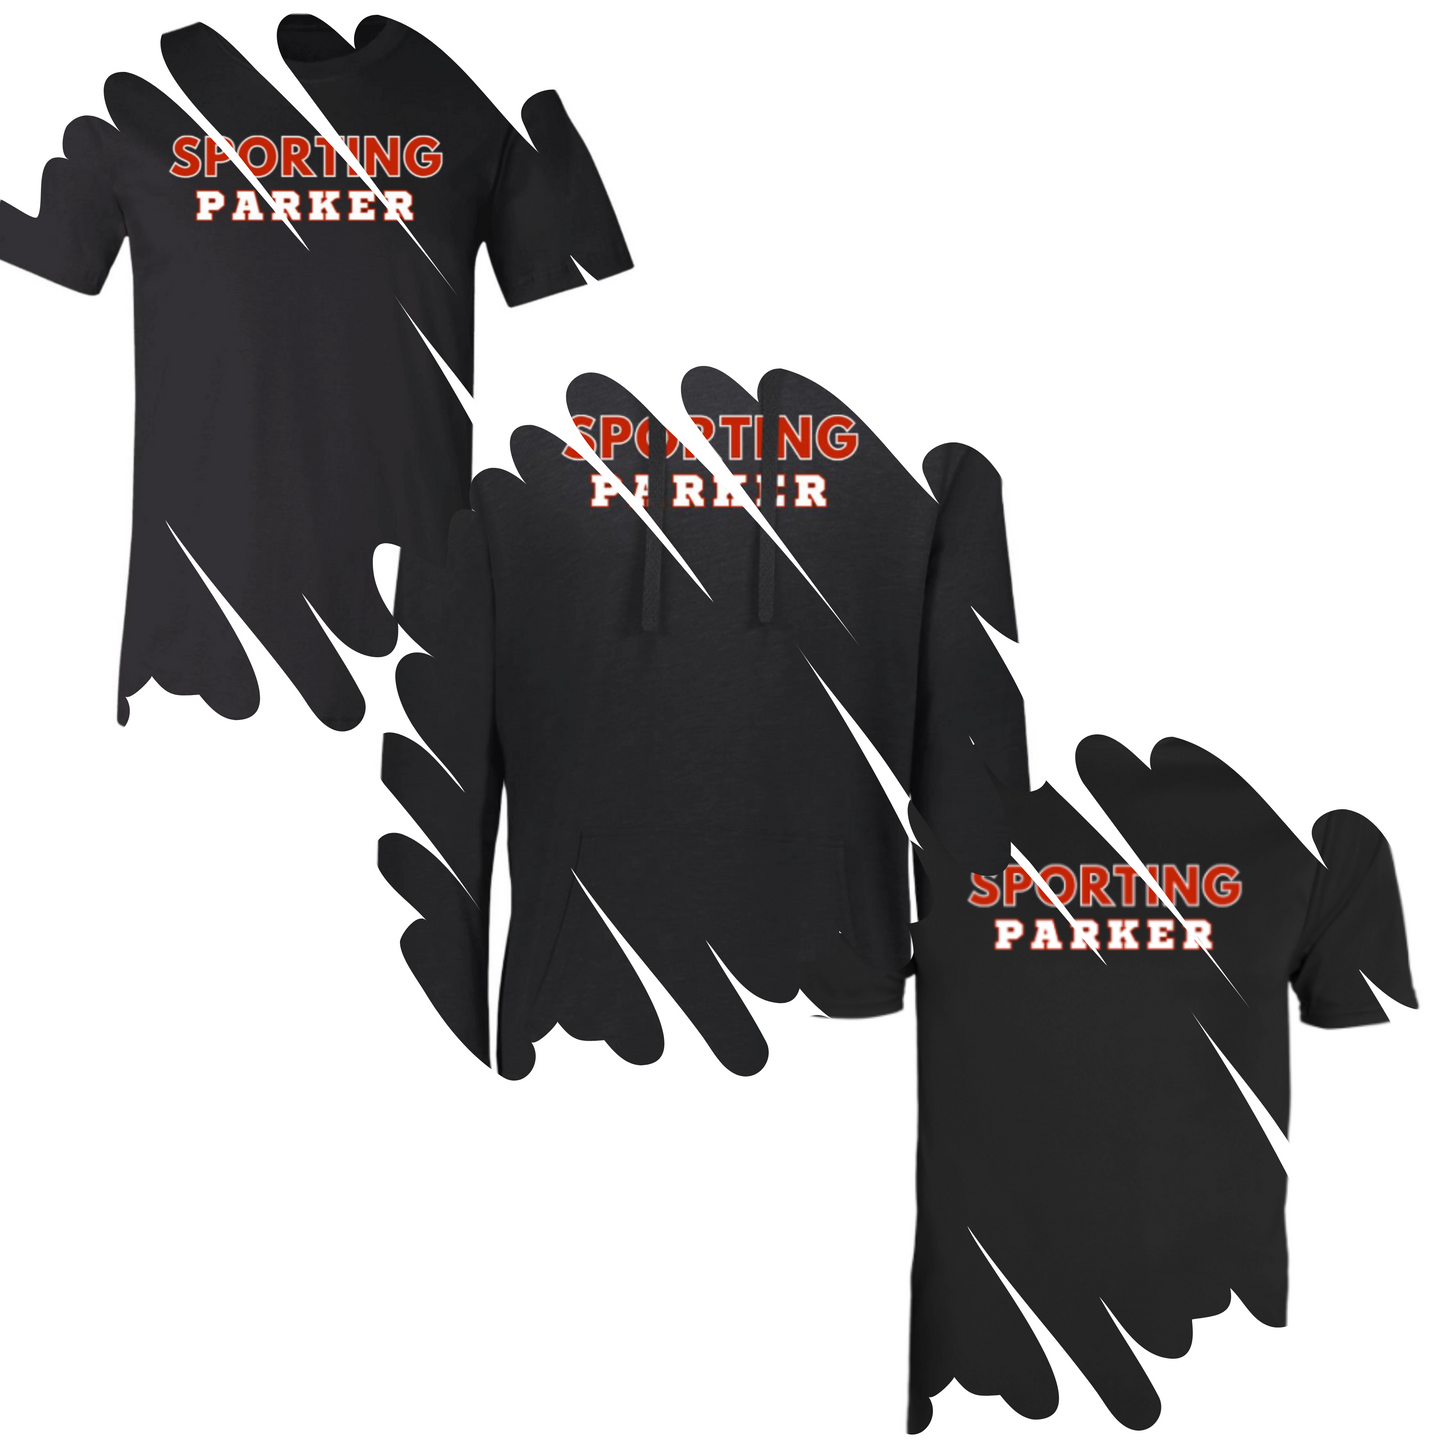 Parker Sporting Black Adult Shirts